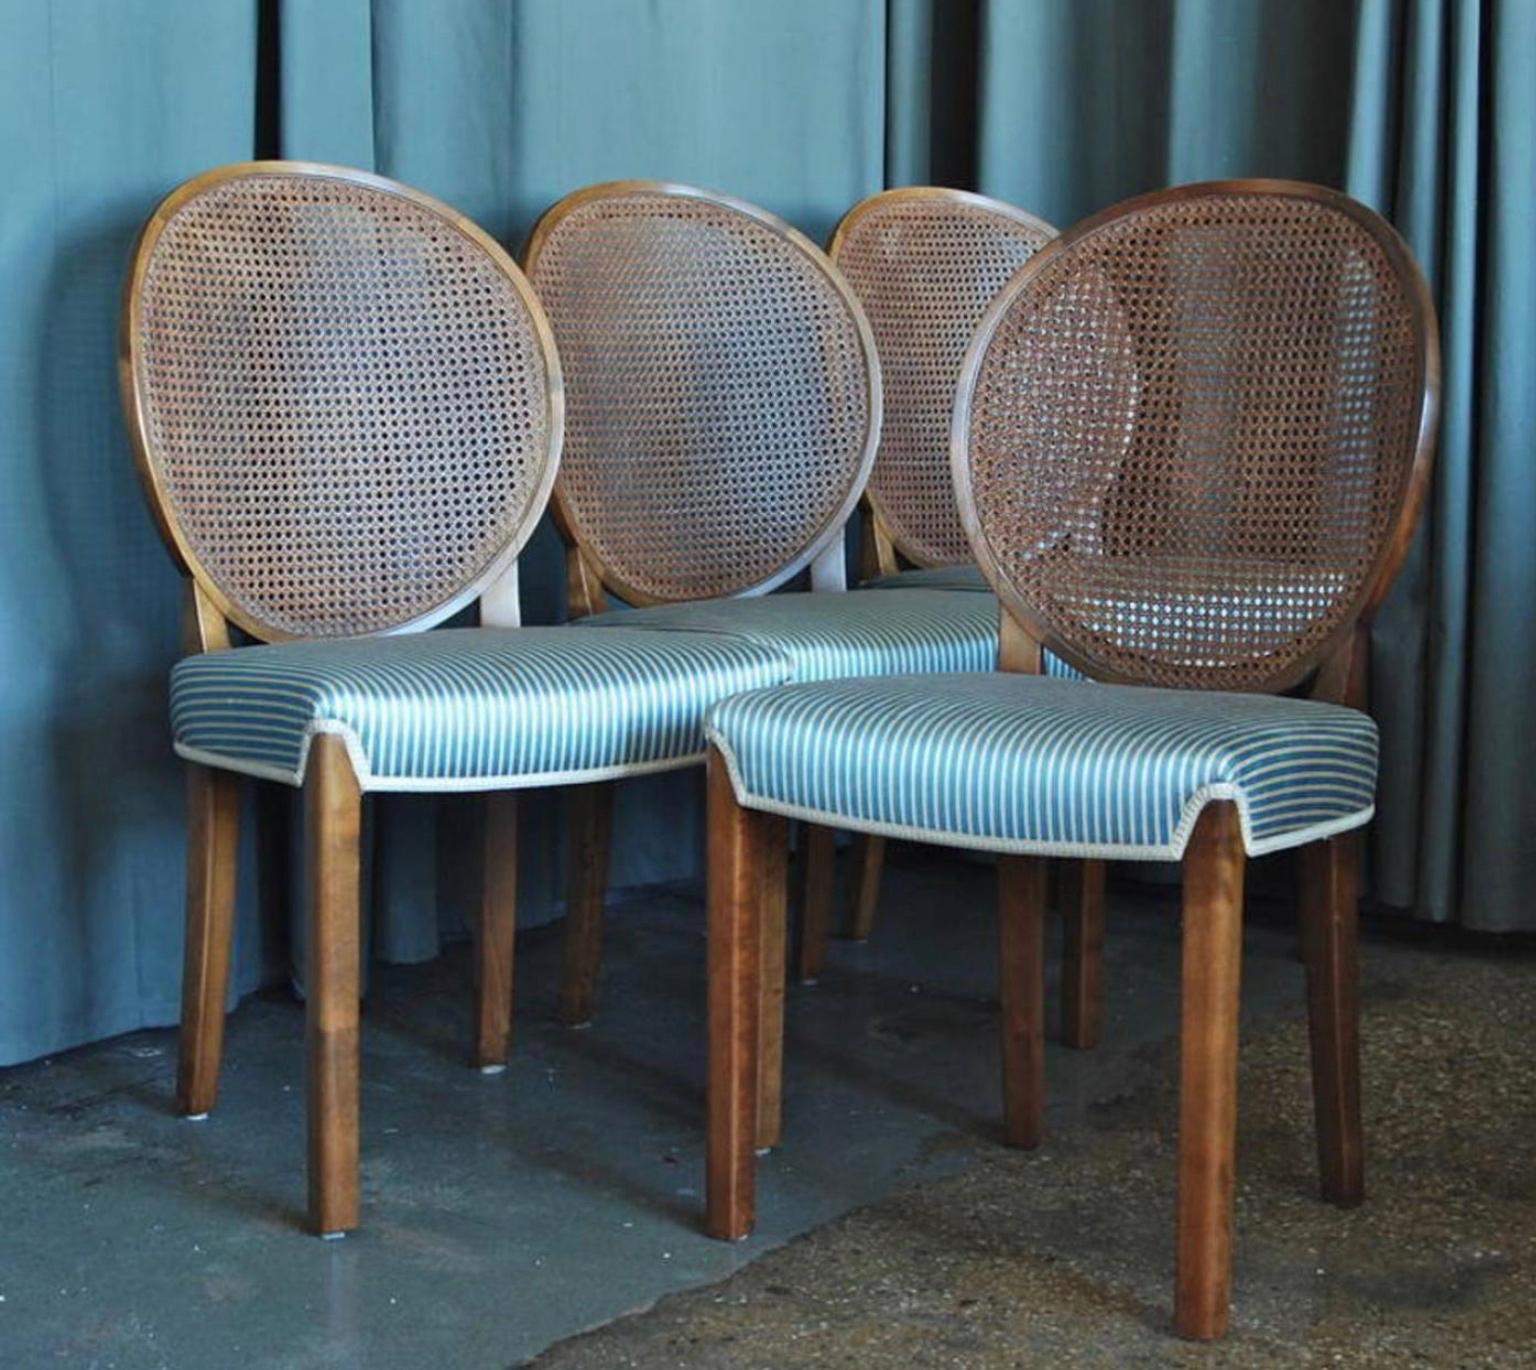 Set of four chairs designed by Axel Einar Hjorth for Nordiska Kompaniet.
Model 